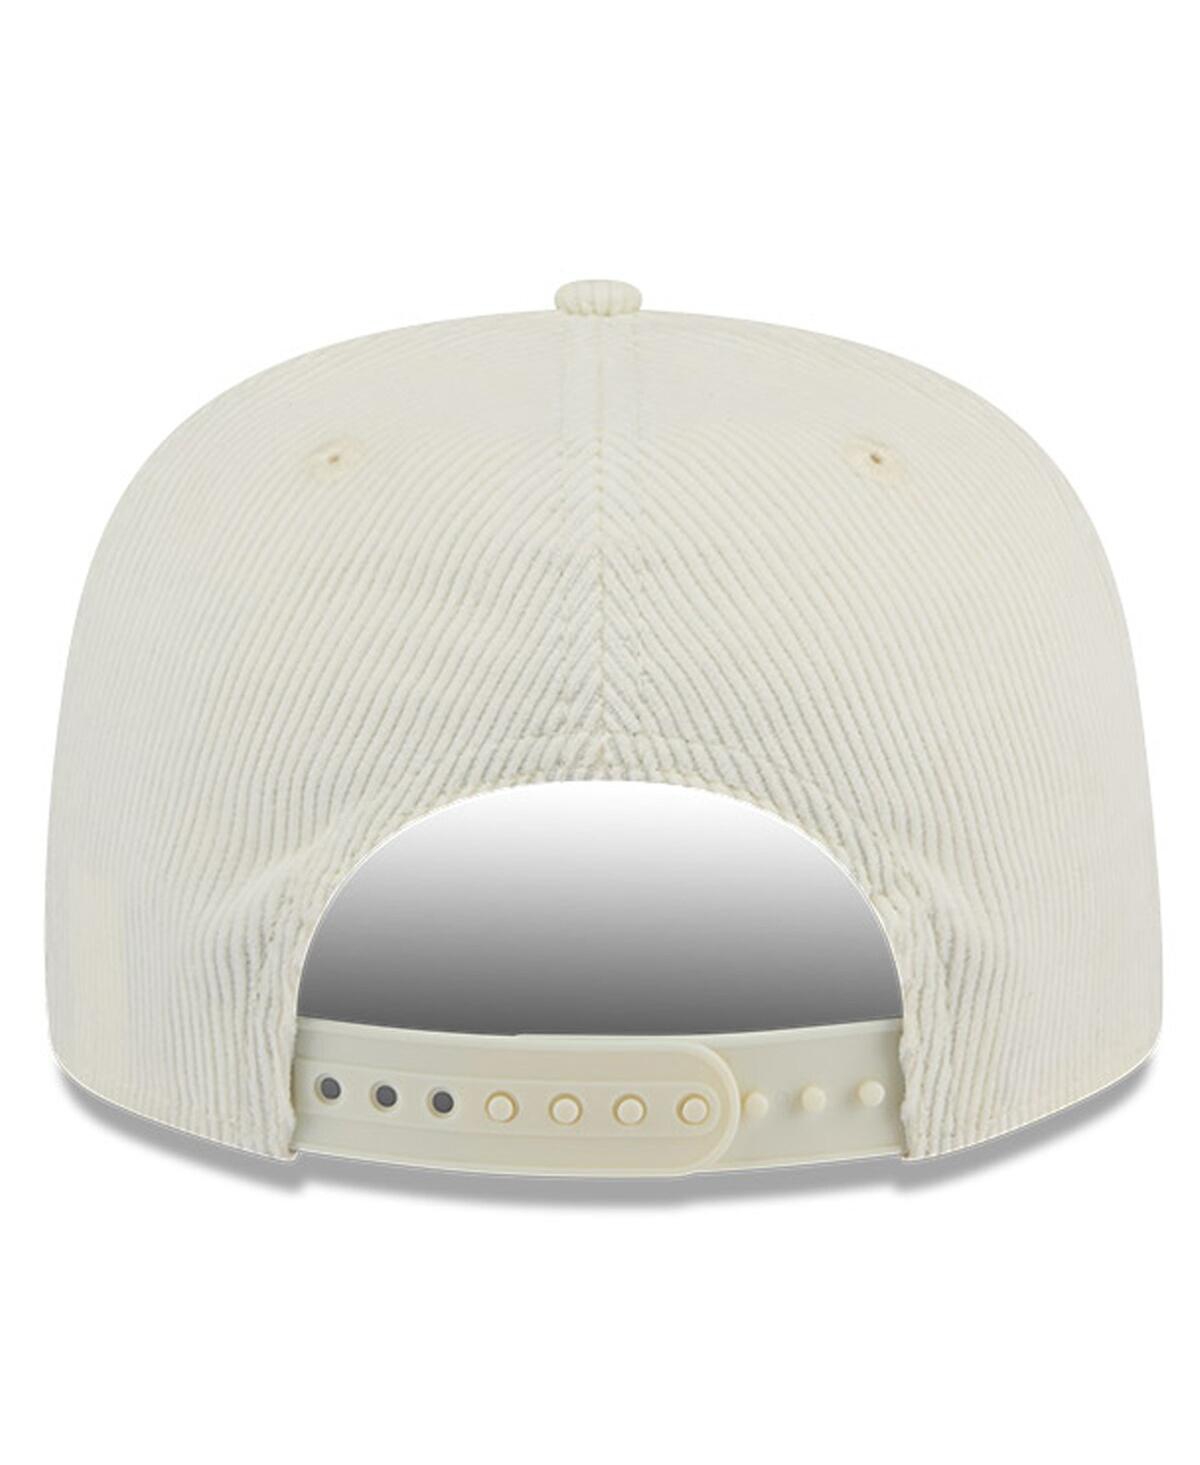 Shop New Era Men's White Texas Tech Red Raiders Throwback Golfer Corduroy Snapback Hat In Cream